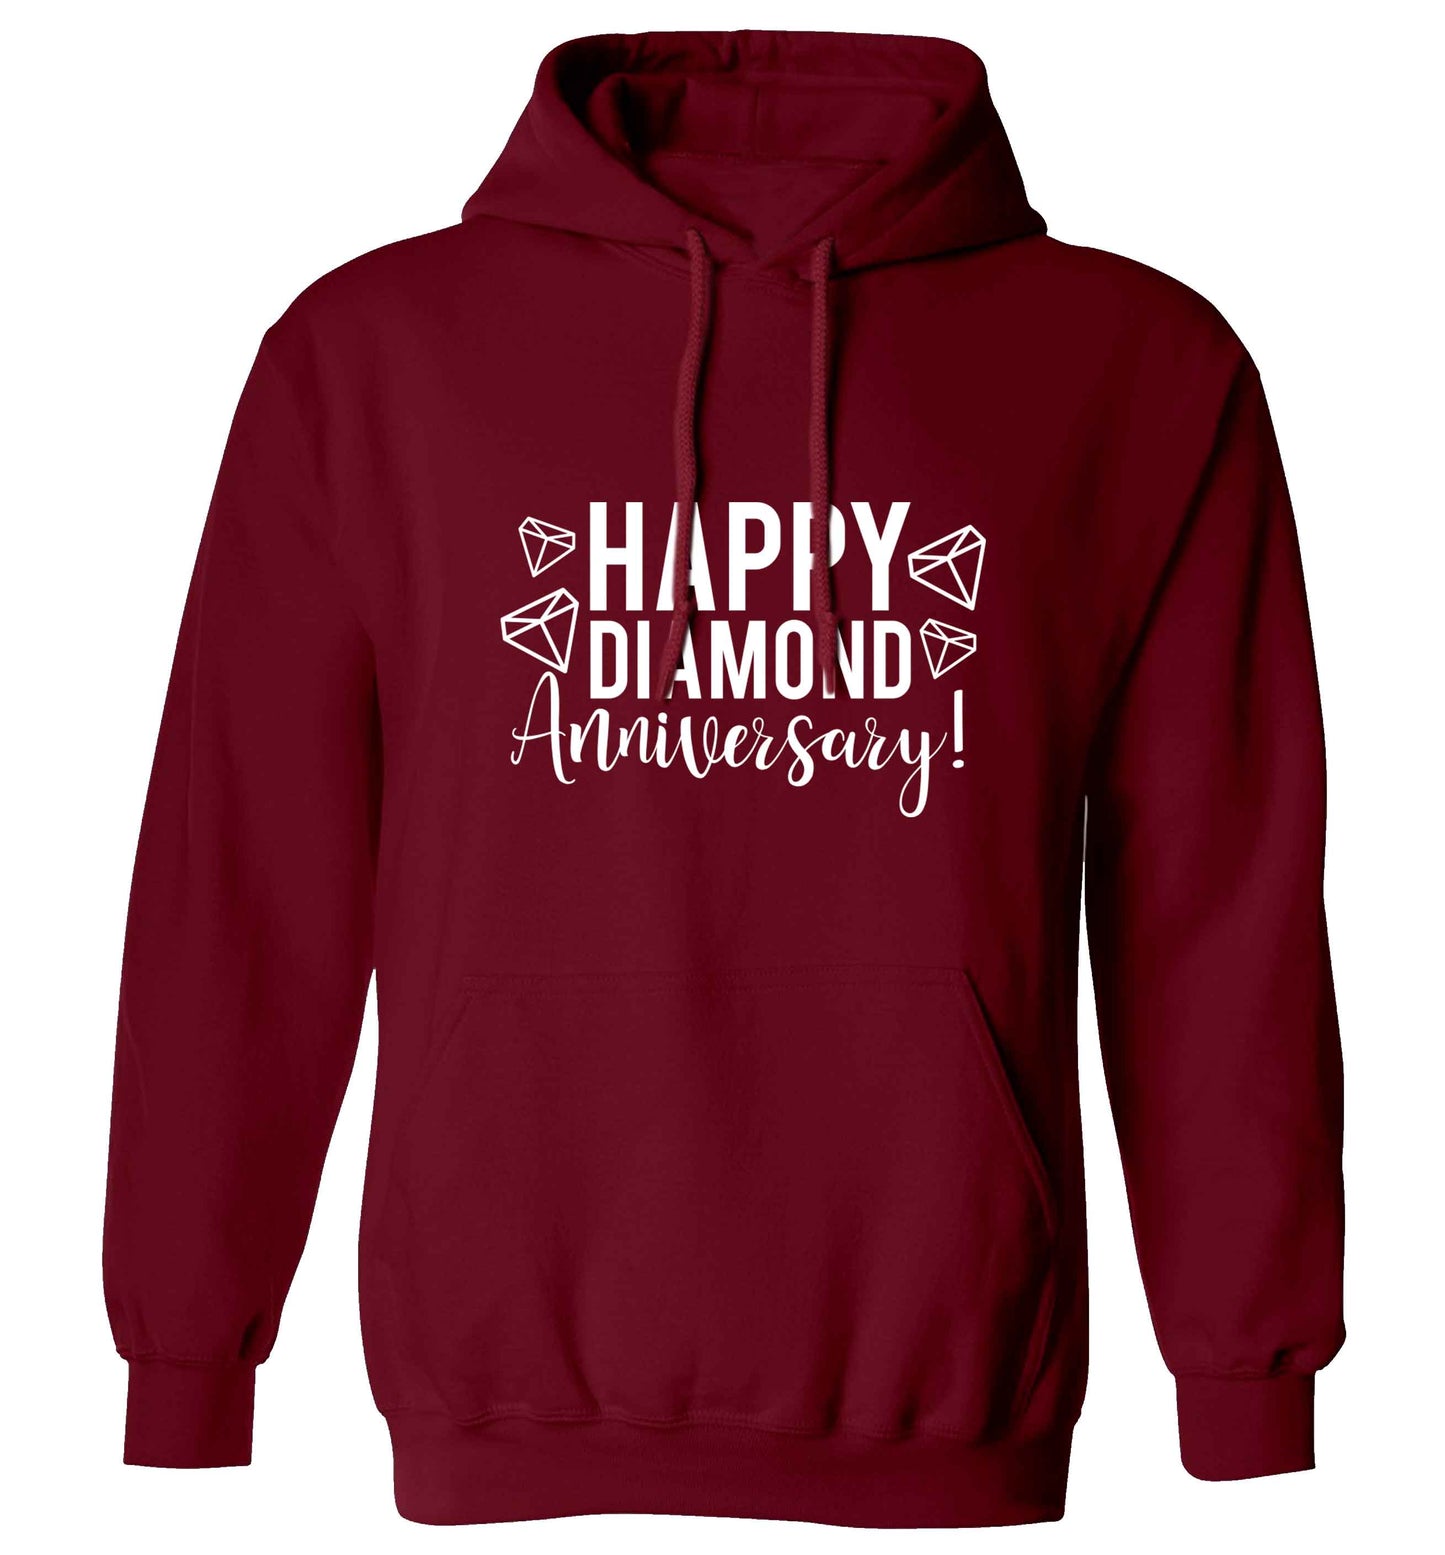 Happy diamond anniversary! adults unisex maroon hoodie 2XL